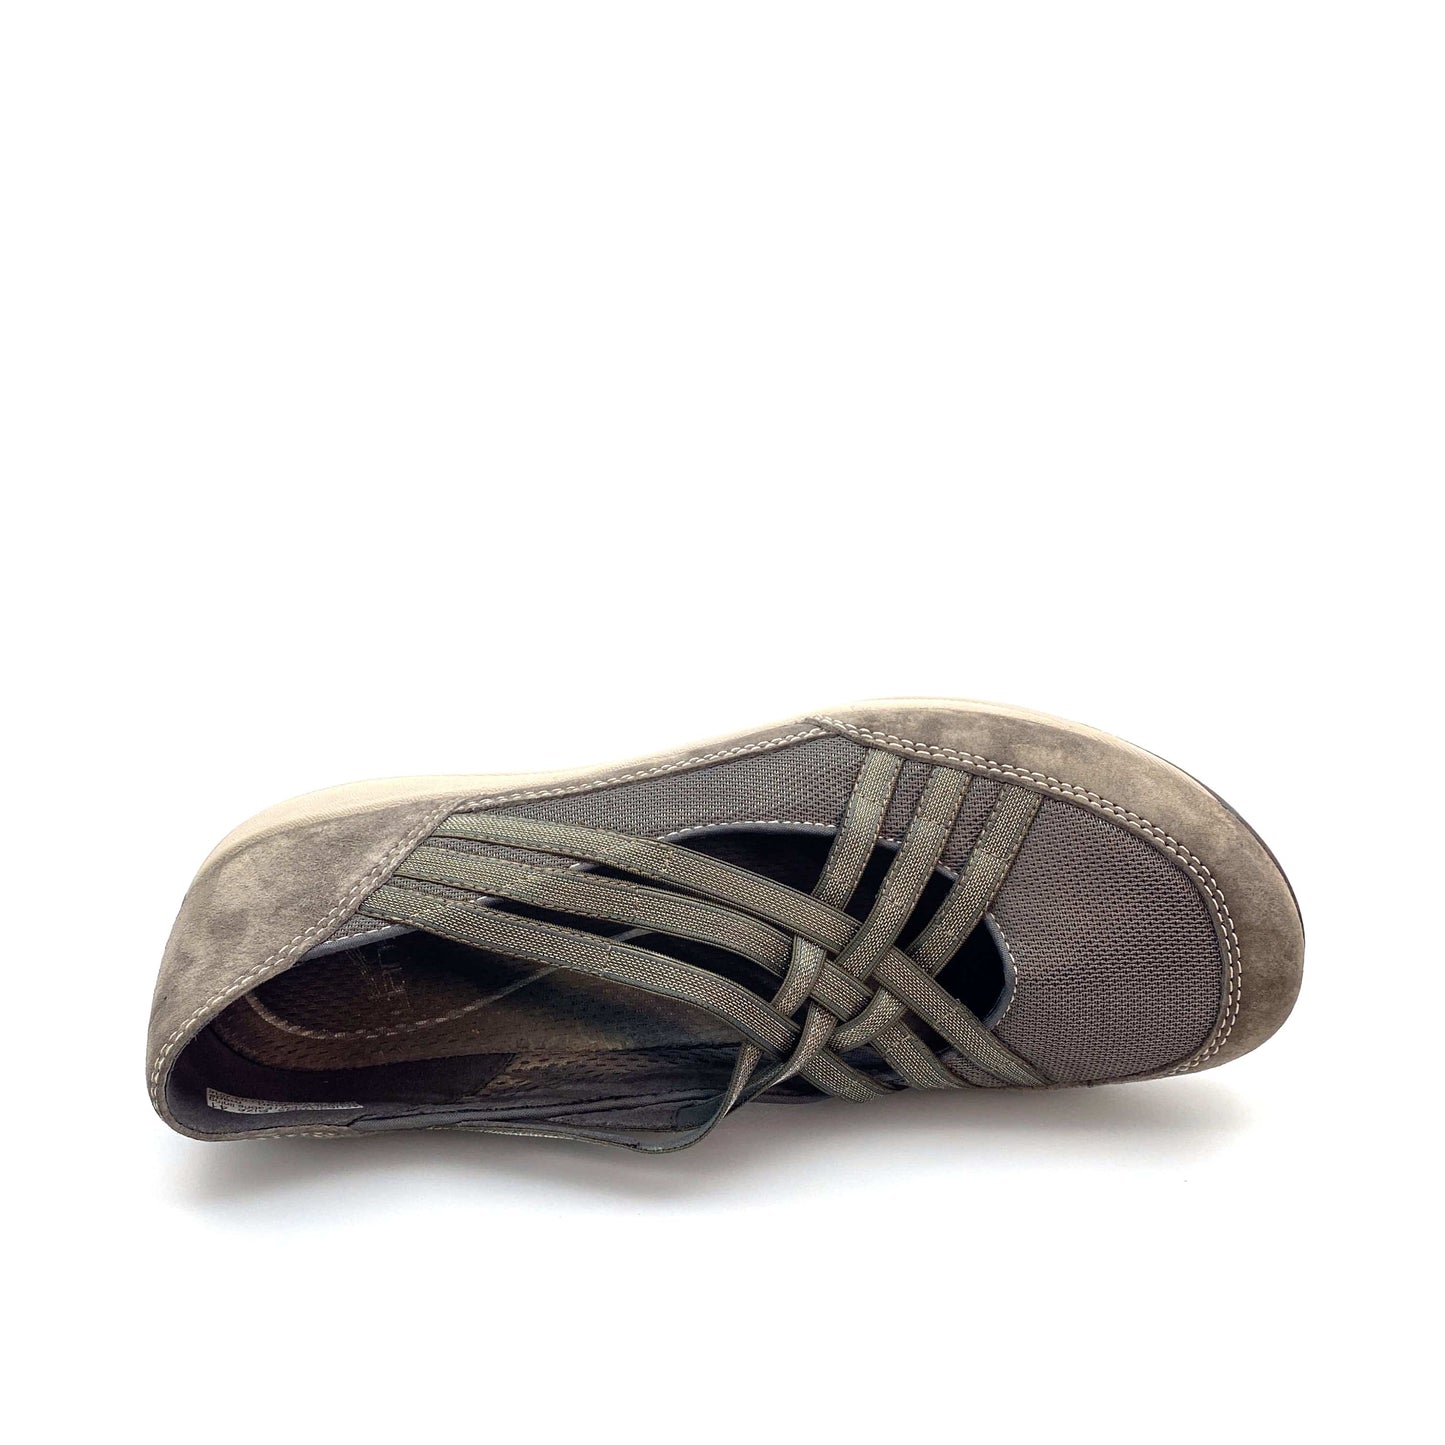 Dansko Womens Size 41 Gray Suede Metallic Hilde Comfort Shoes